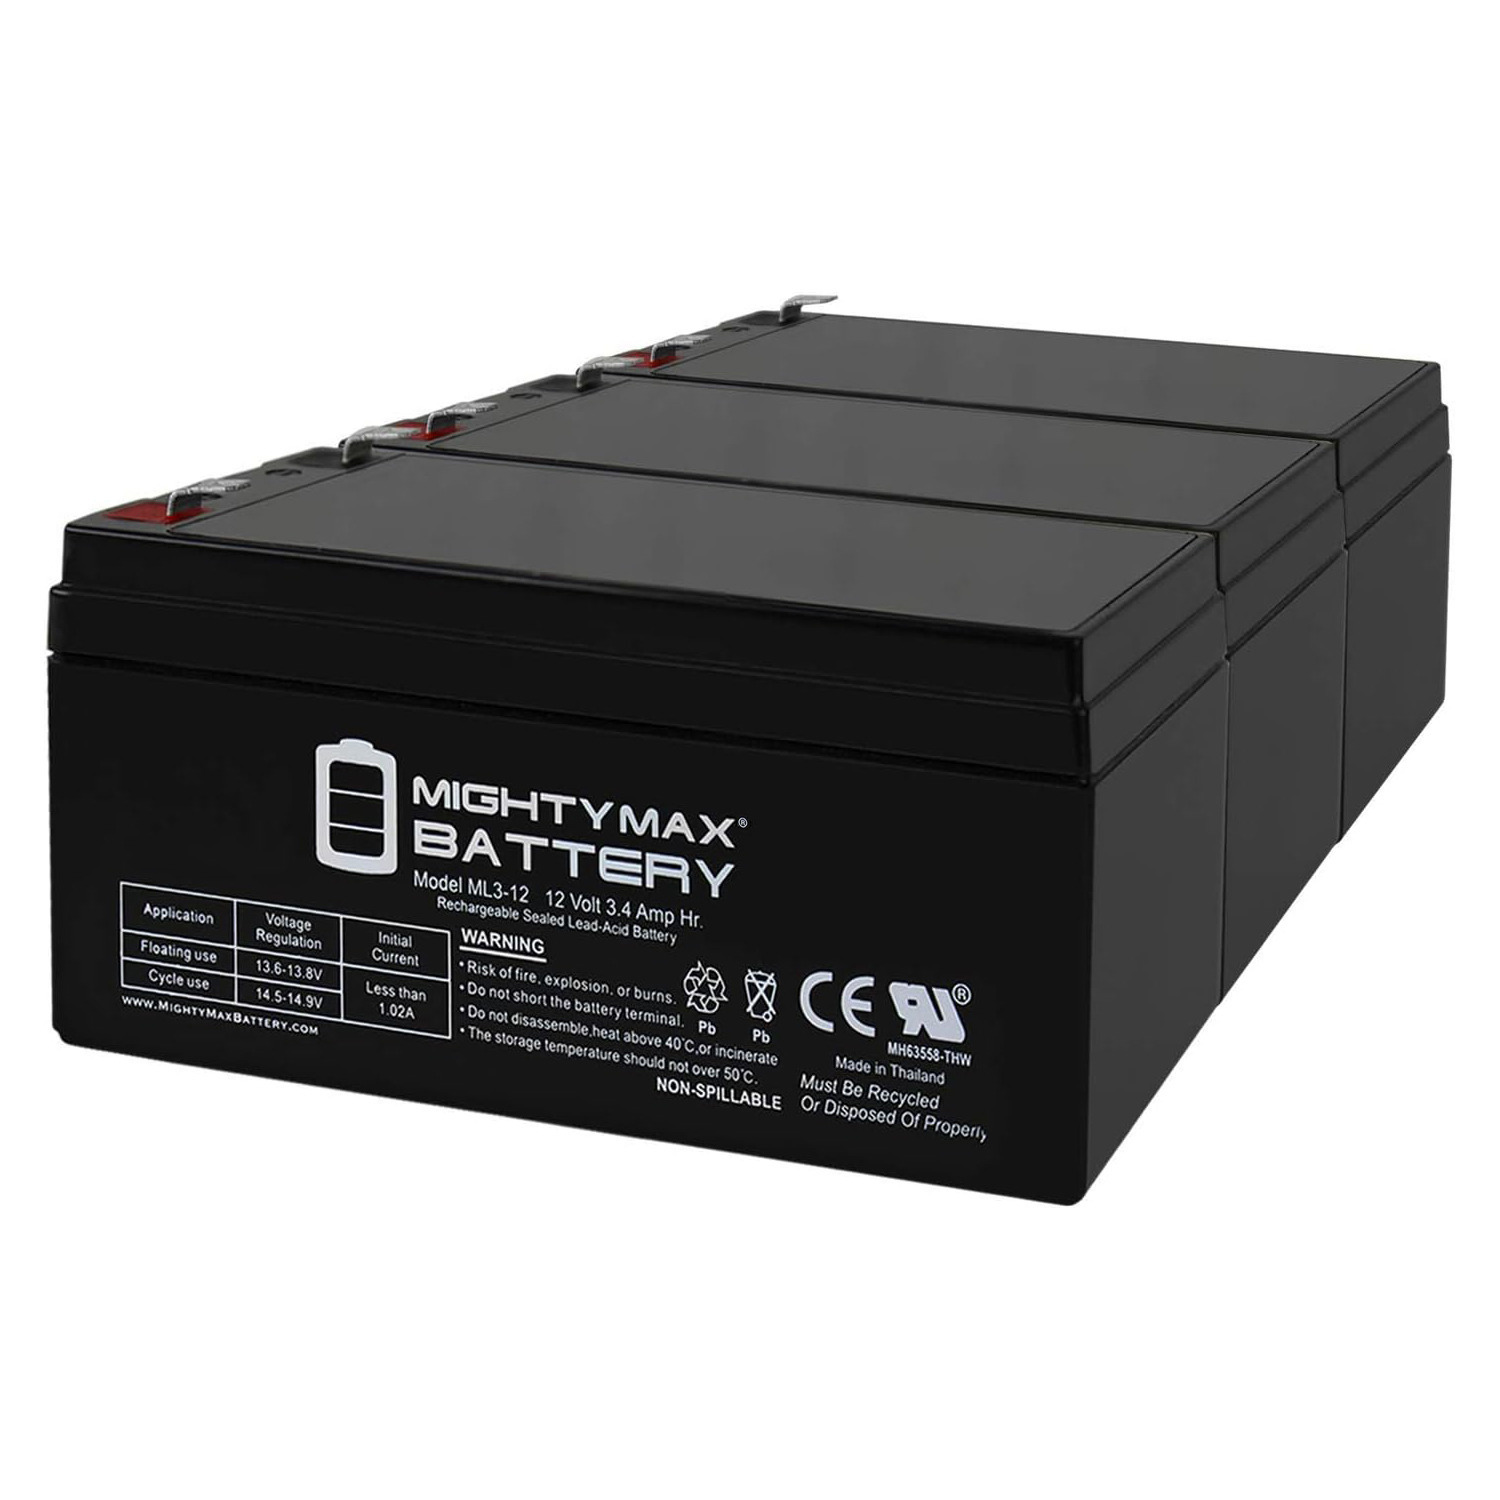 12V 3AH SLA Replacement Battery for KMG-3-12 - 3 Pack